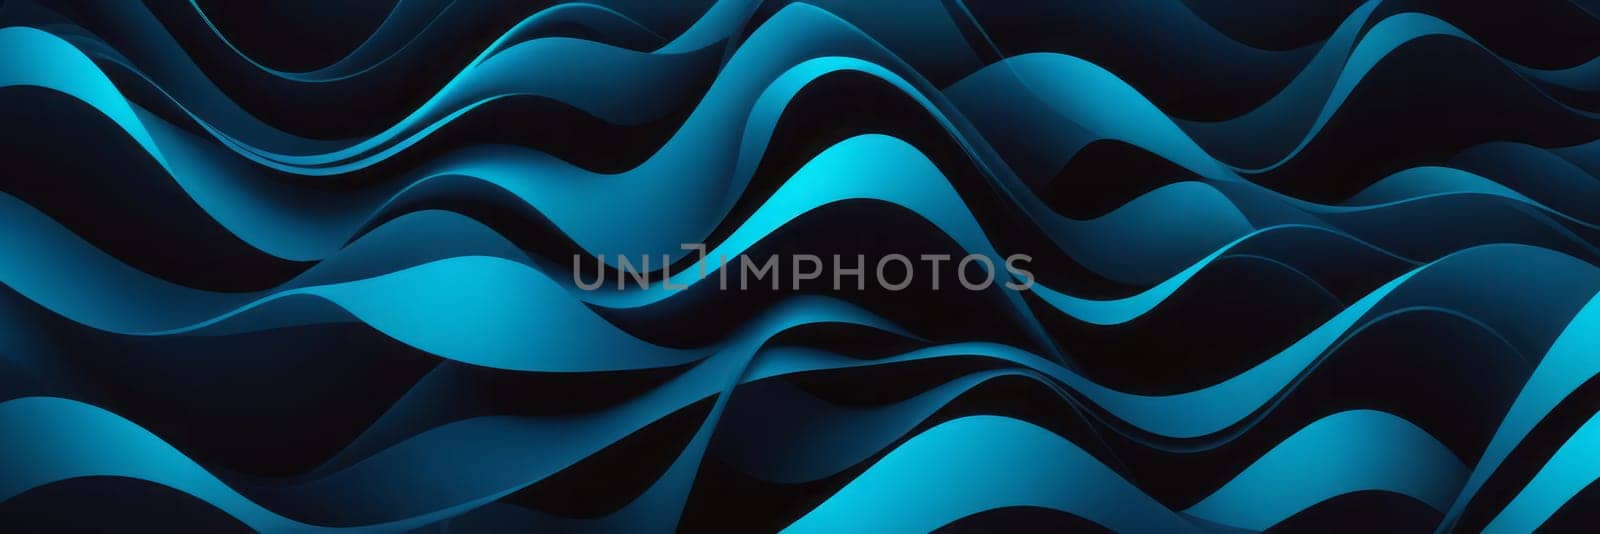 Black Looped Shapes Gradient Wallpaper by nkotlyar